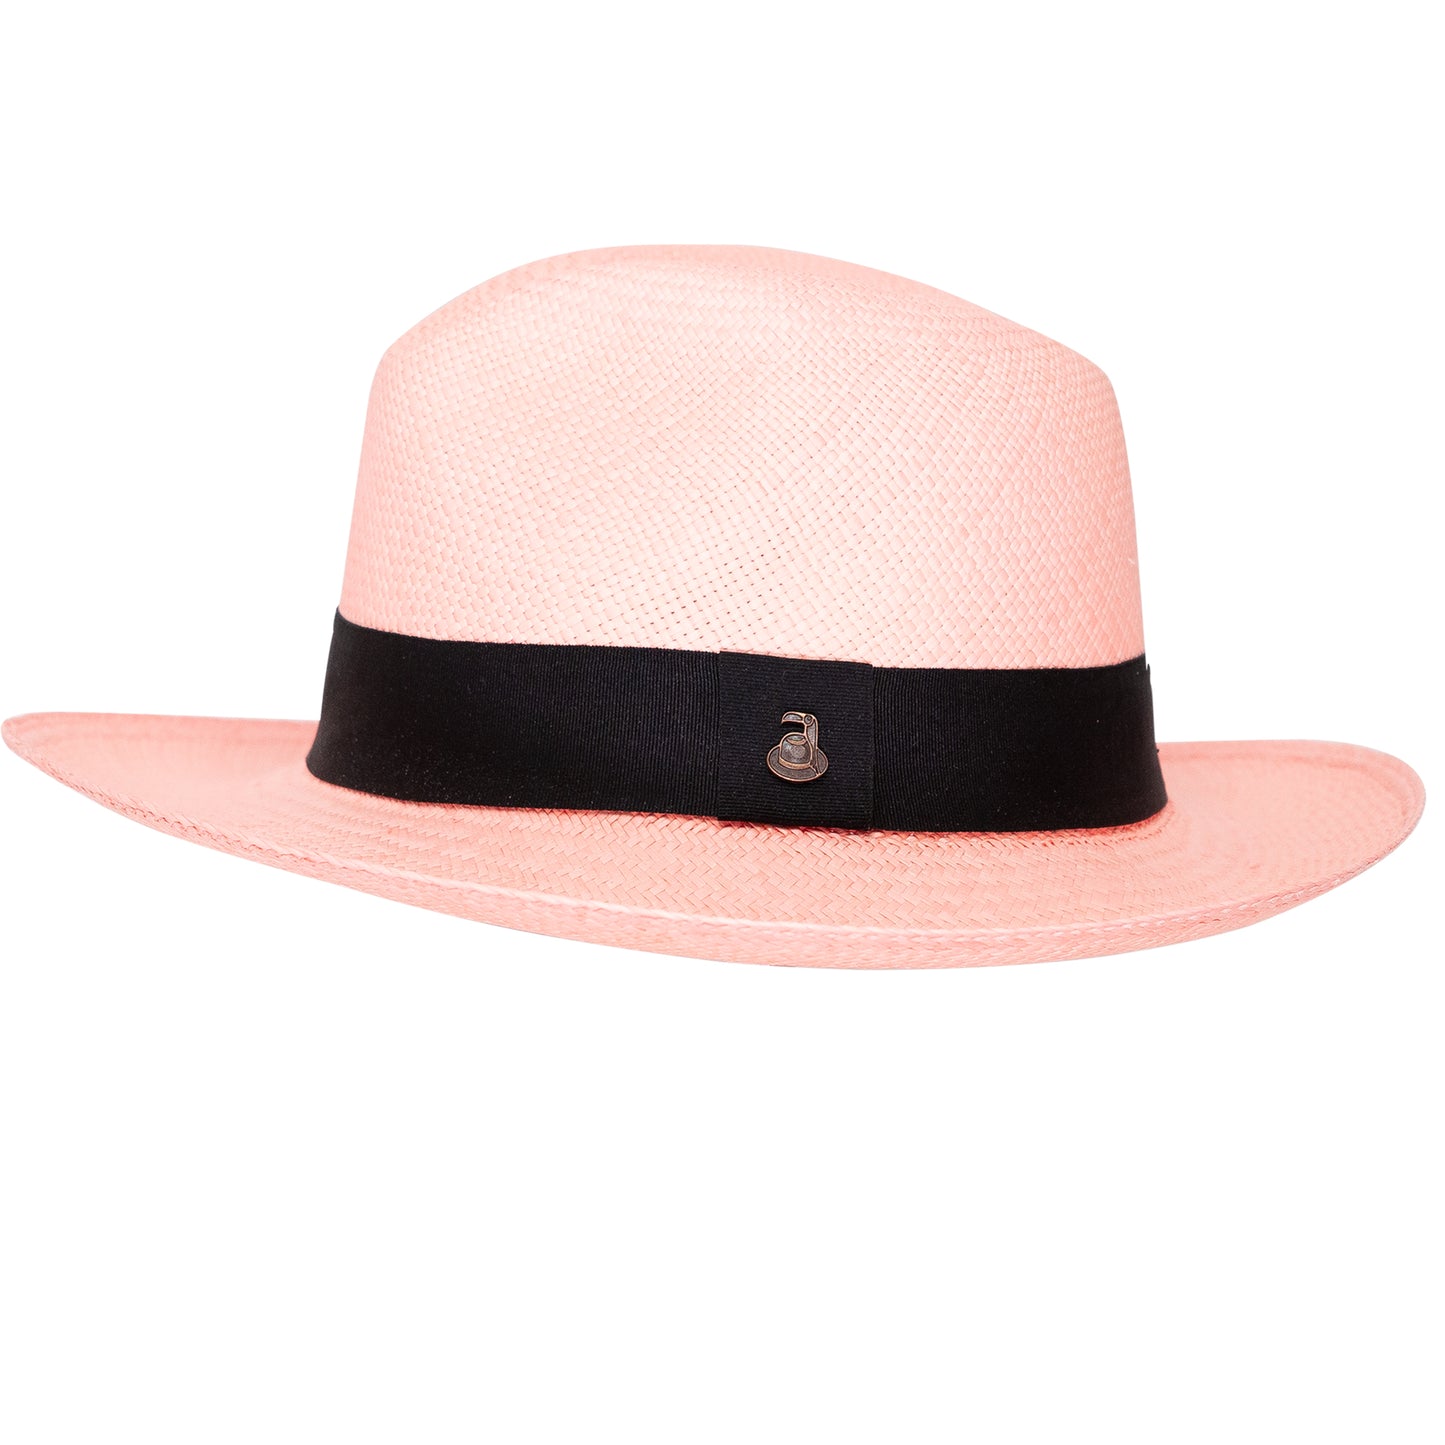 Ladies Panama Hat in Pink